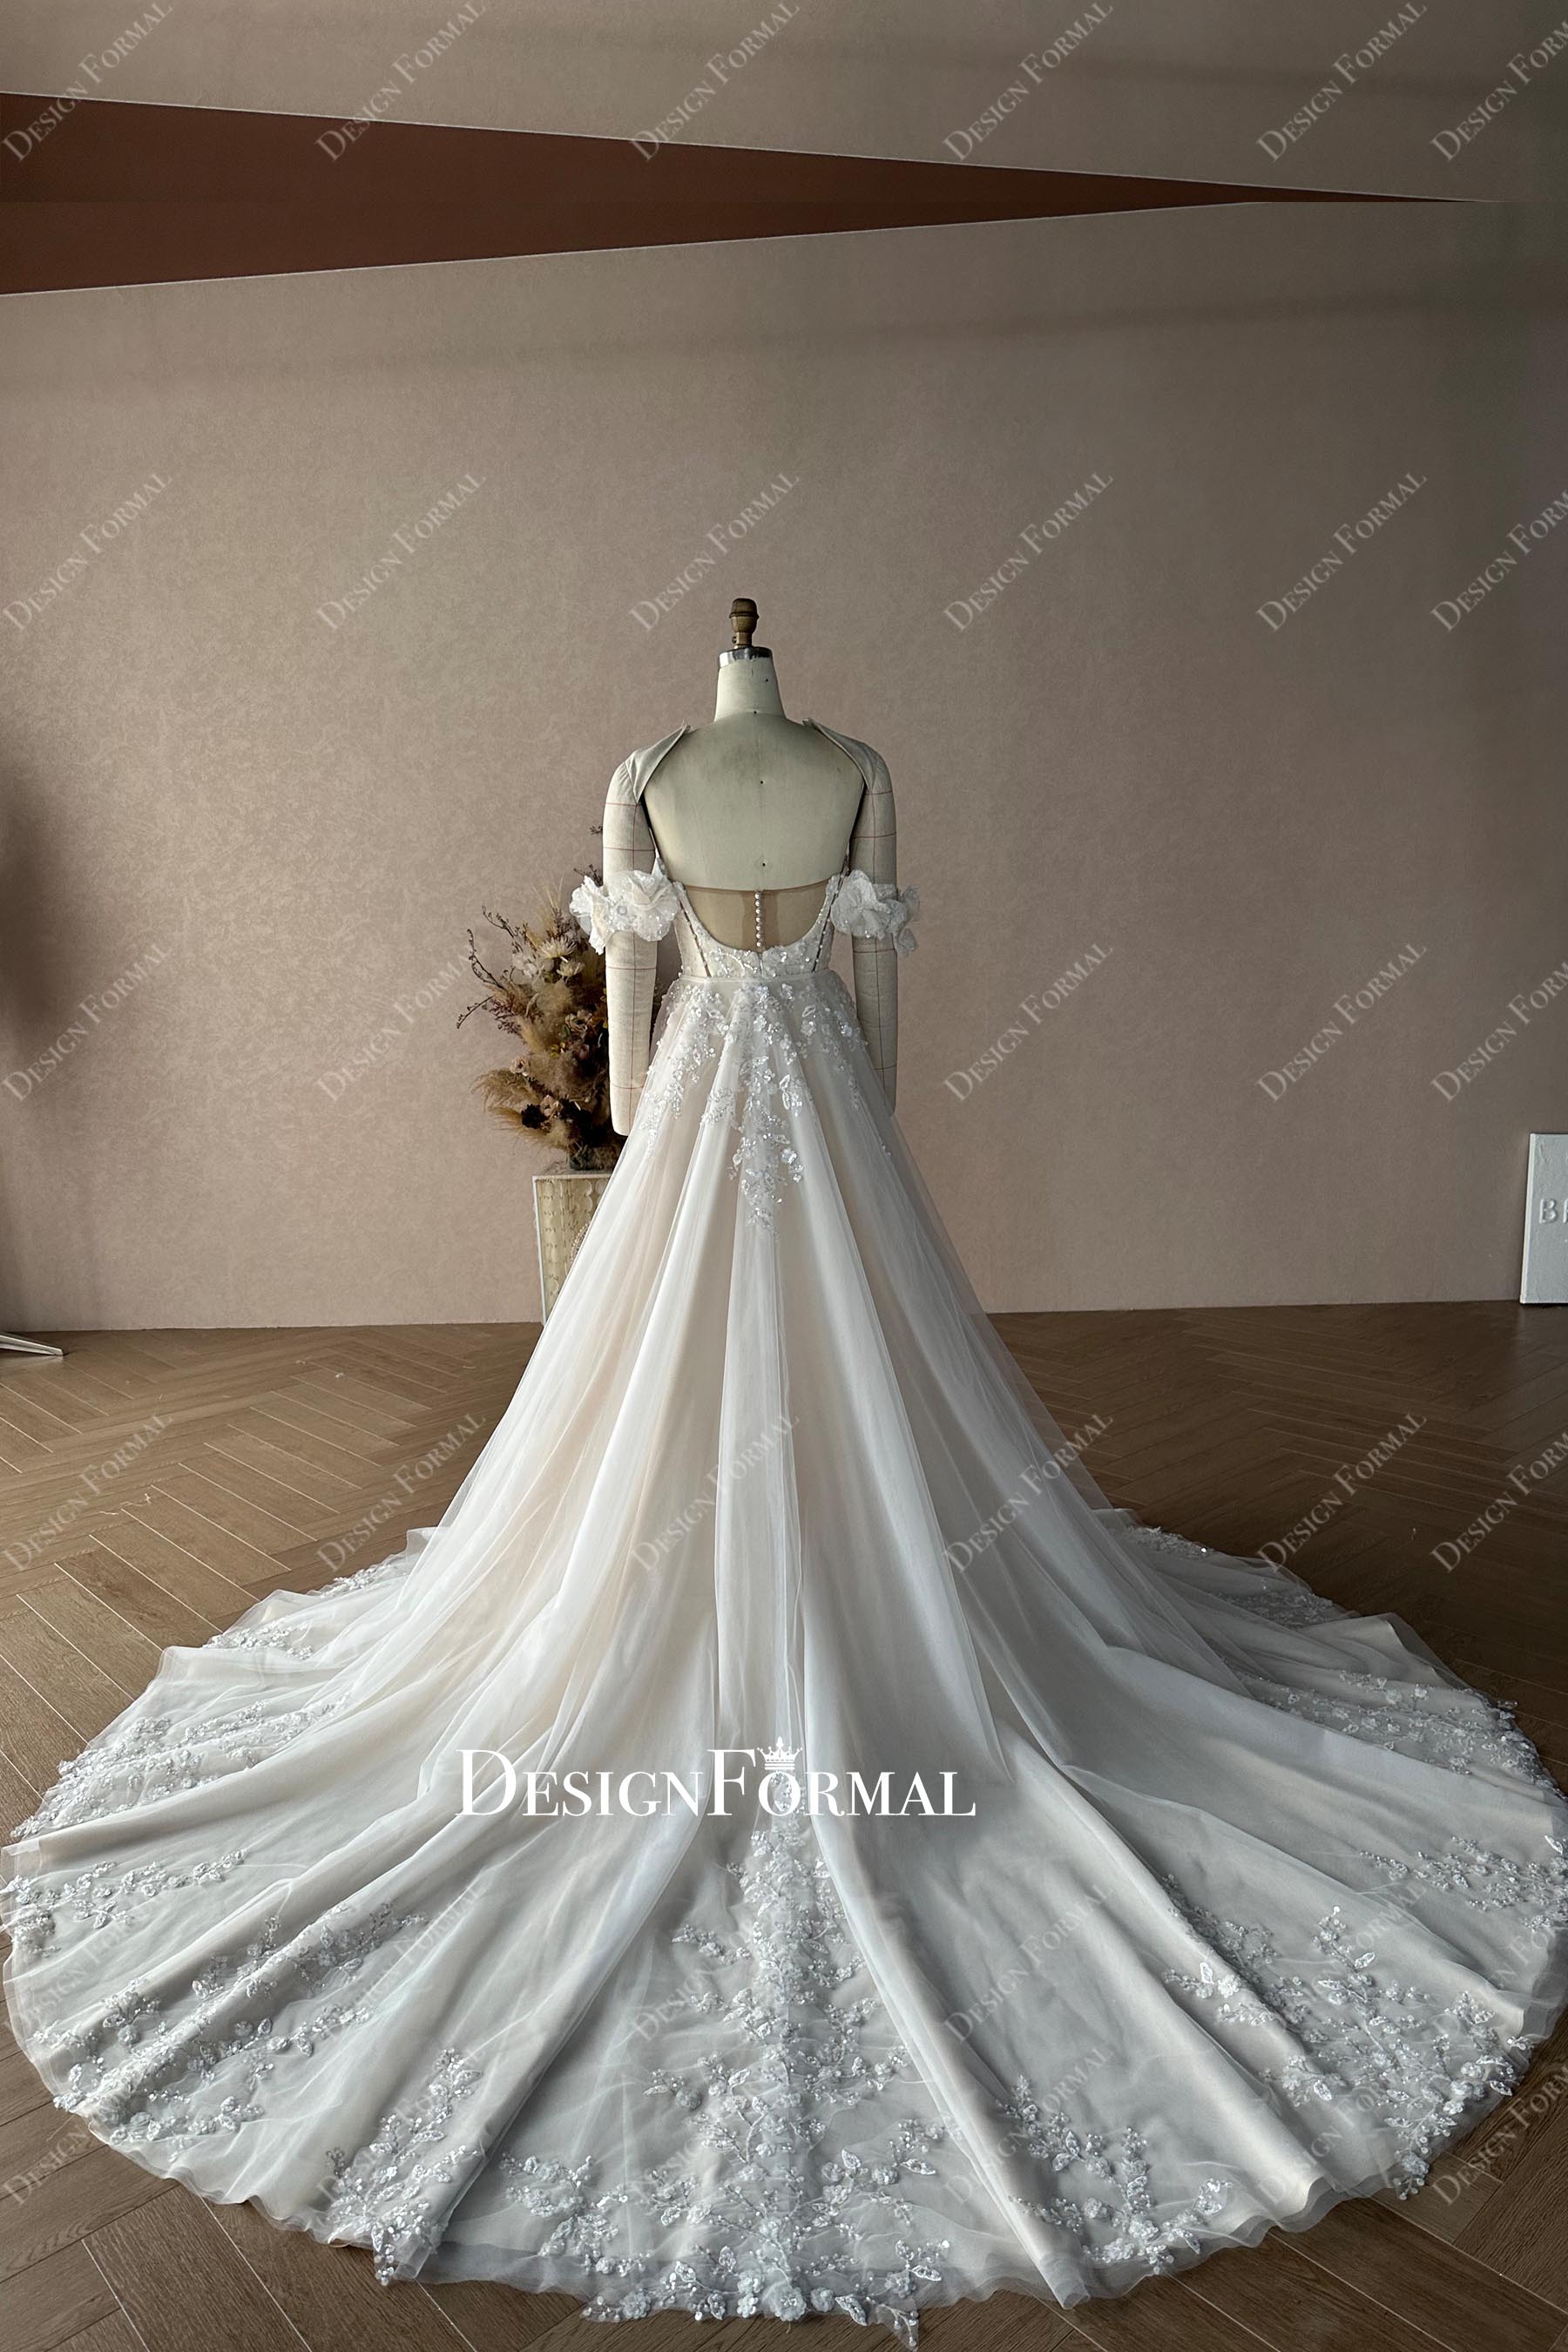 long train designer ball gown wedding dress for sale